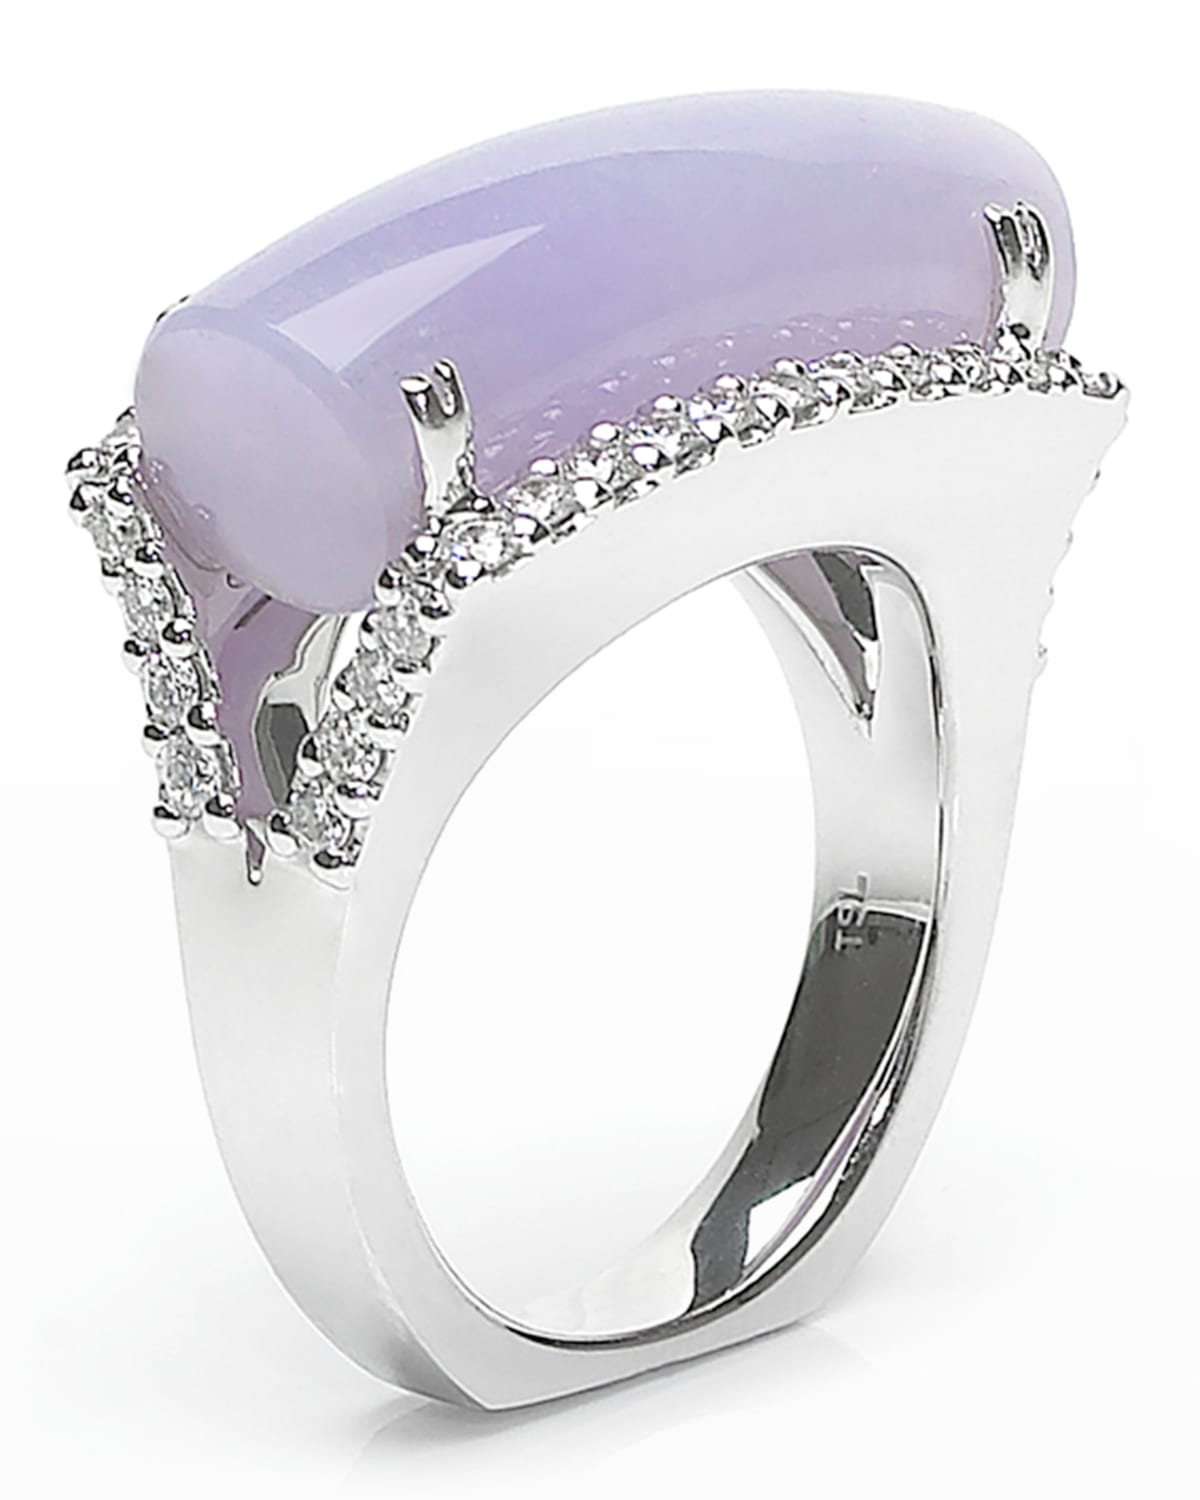 David C.A. Lin 18k White Gold Diamond and Lavender Jadeite Ring, Size 7